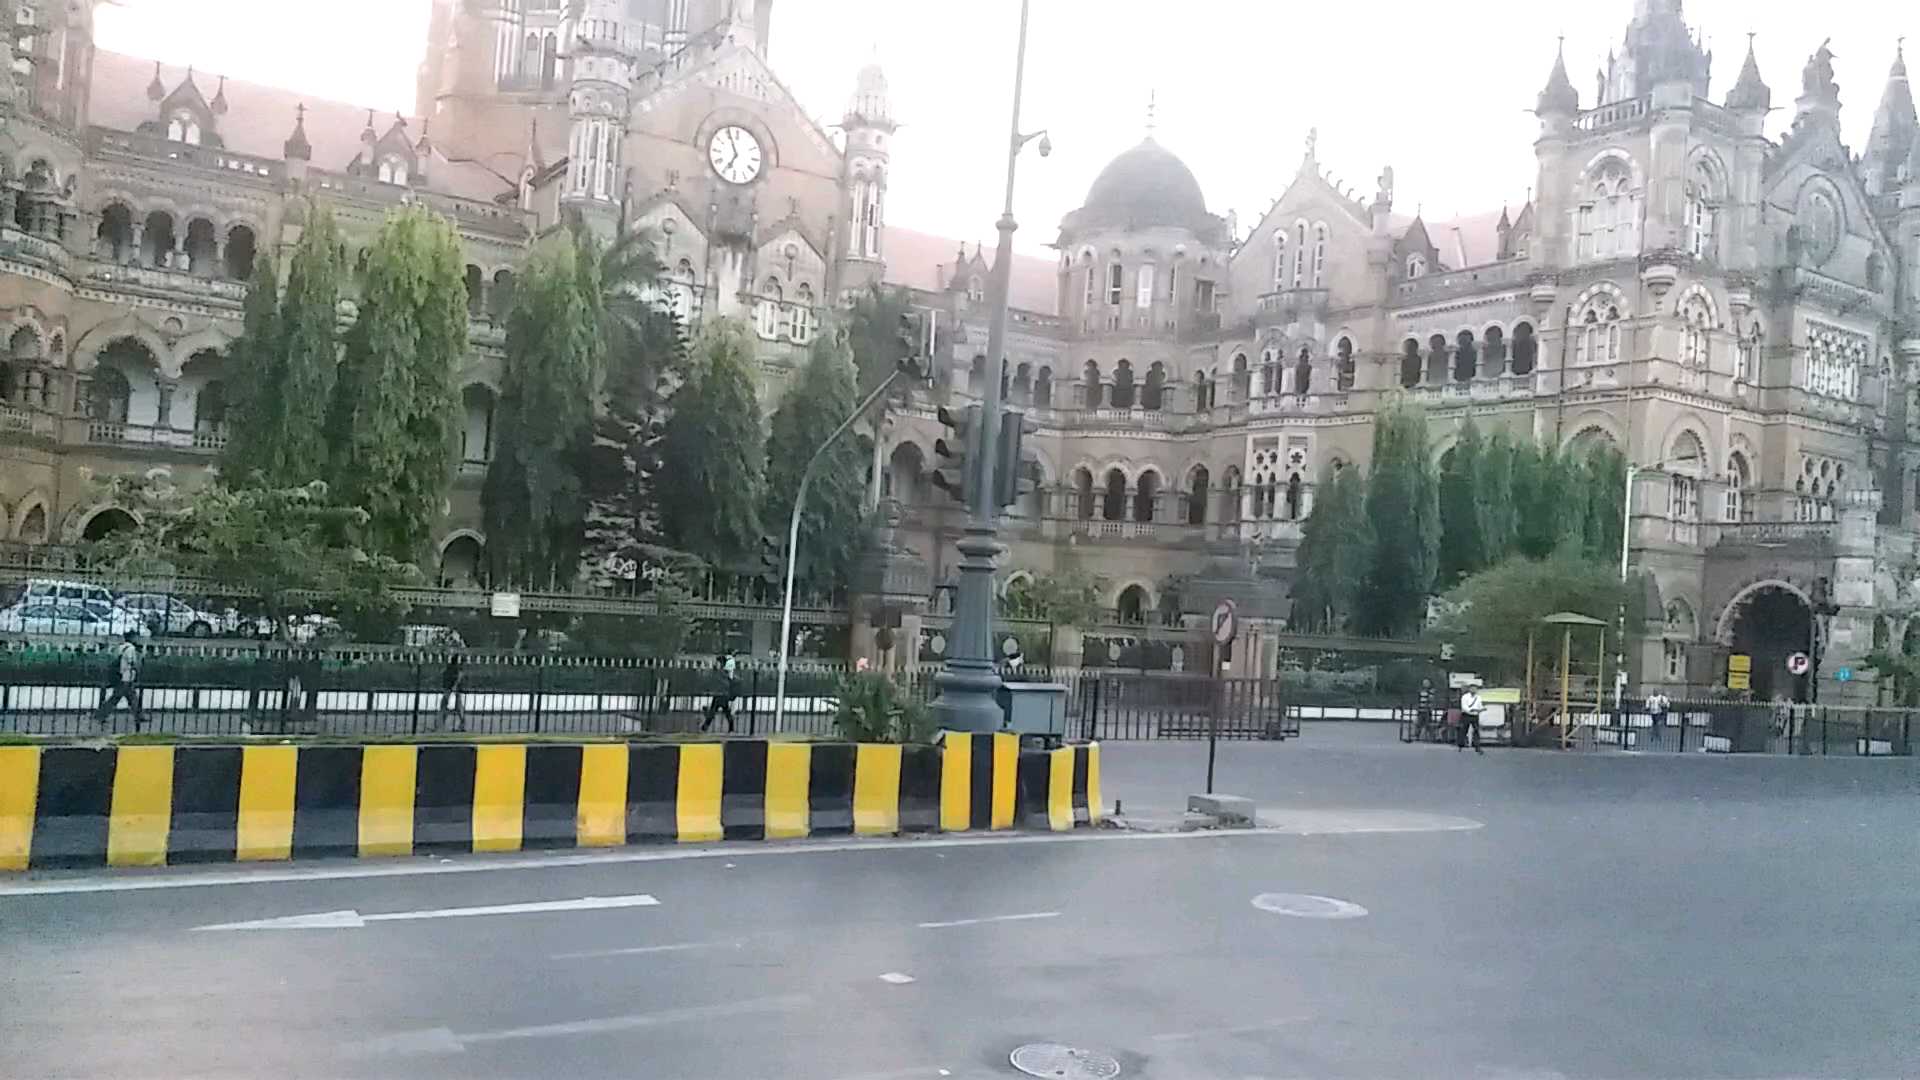 attack on mumbai